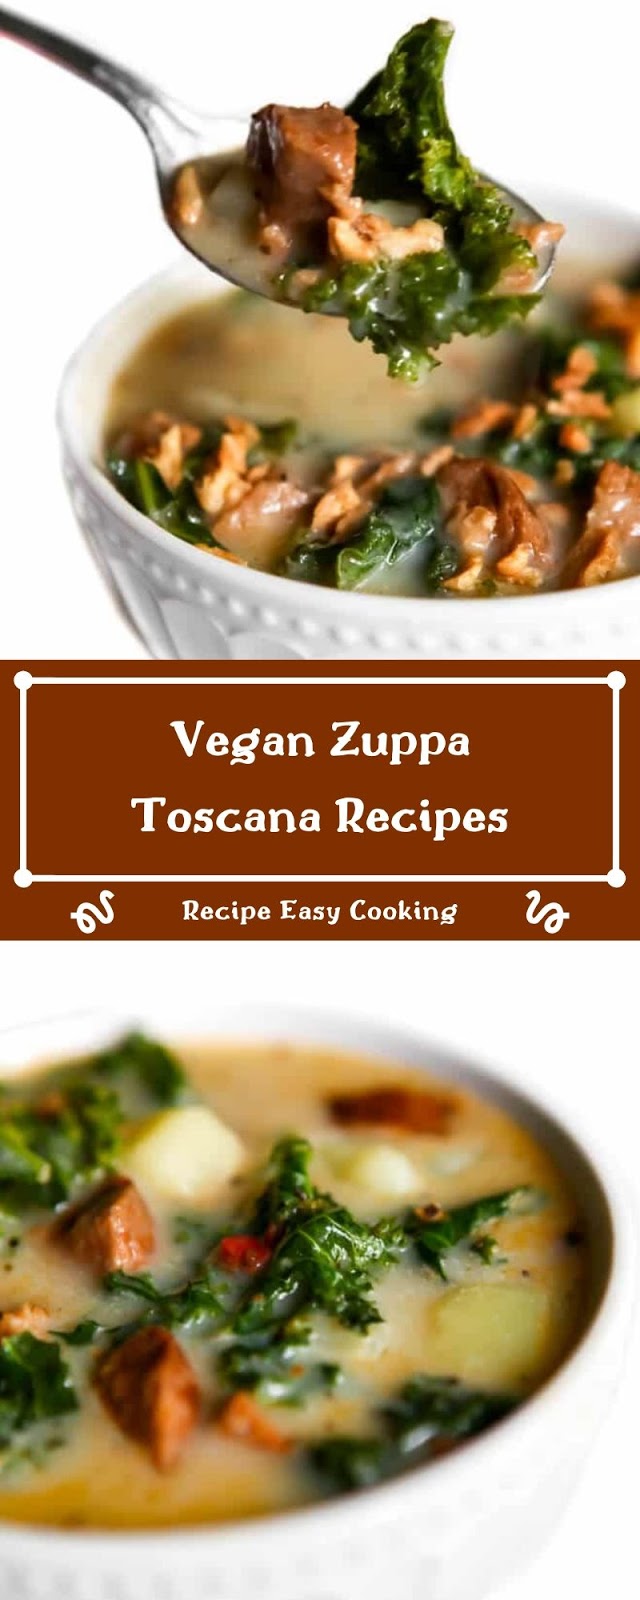 Vegan Zuppa Toscana Recipes